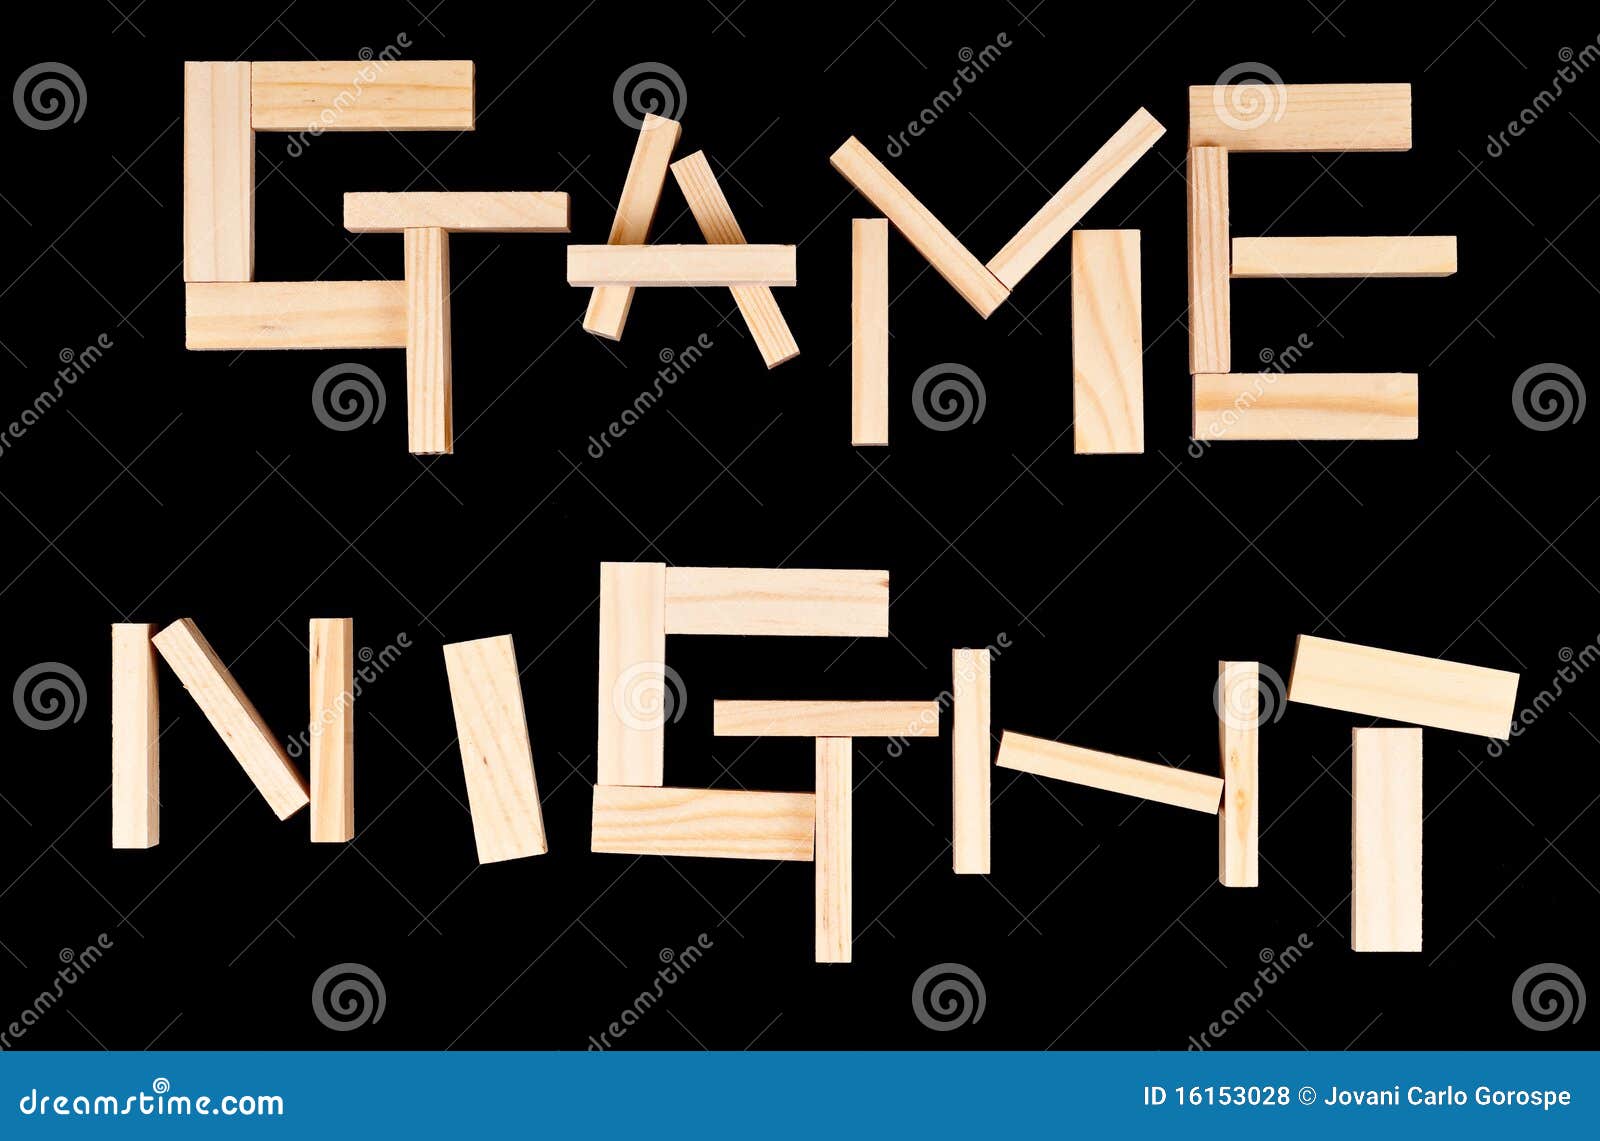 game night clip art free - photo #41